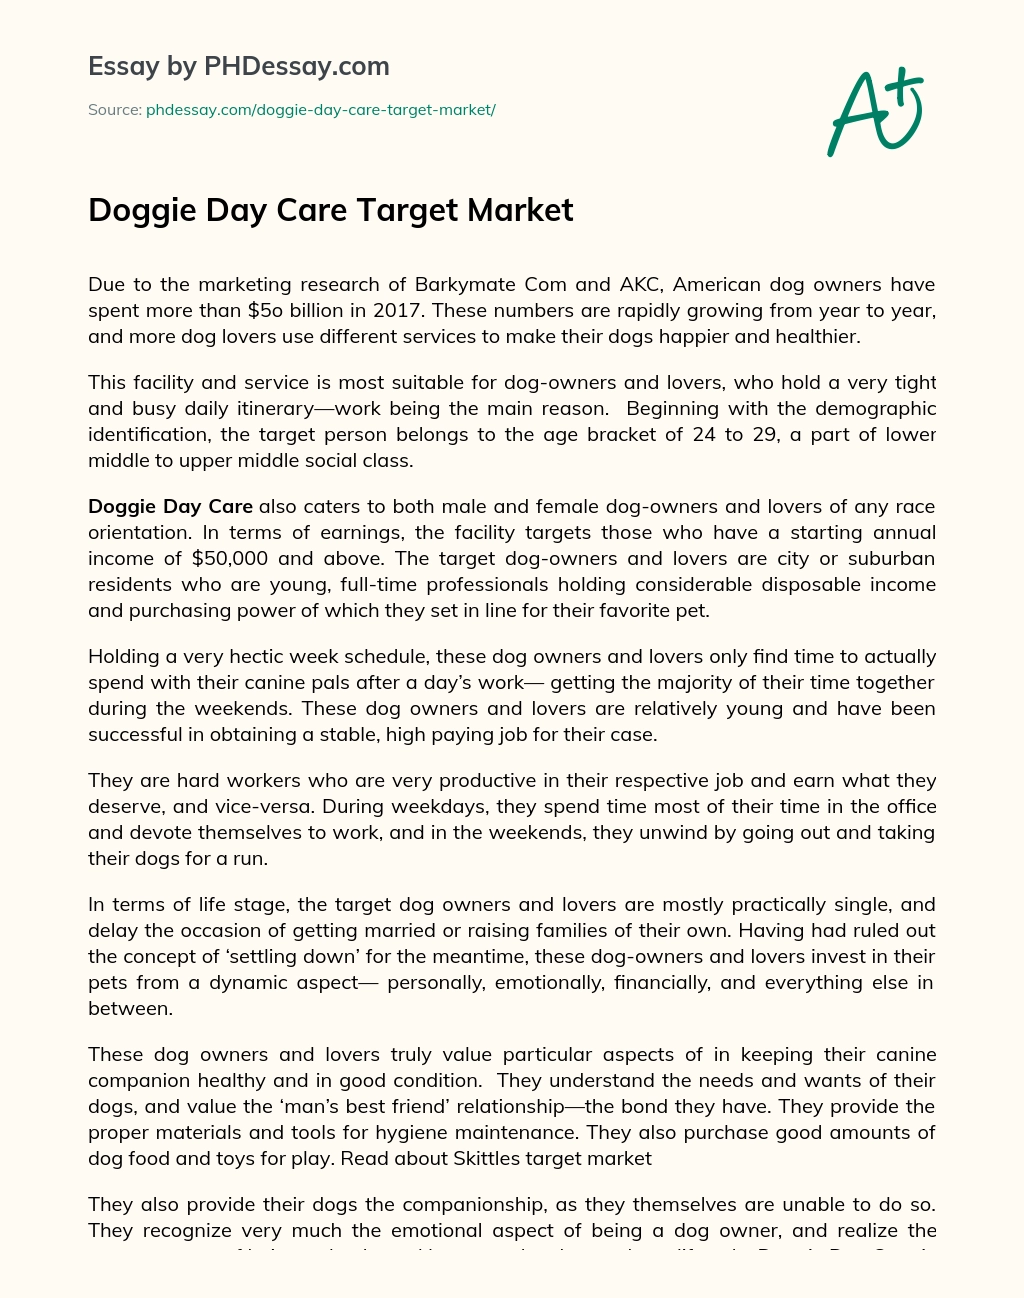 Doggie Day Care Target Market essay